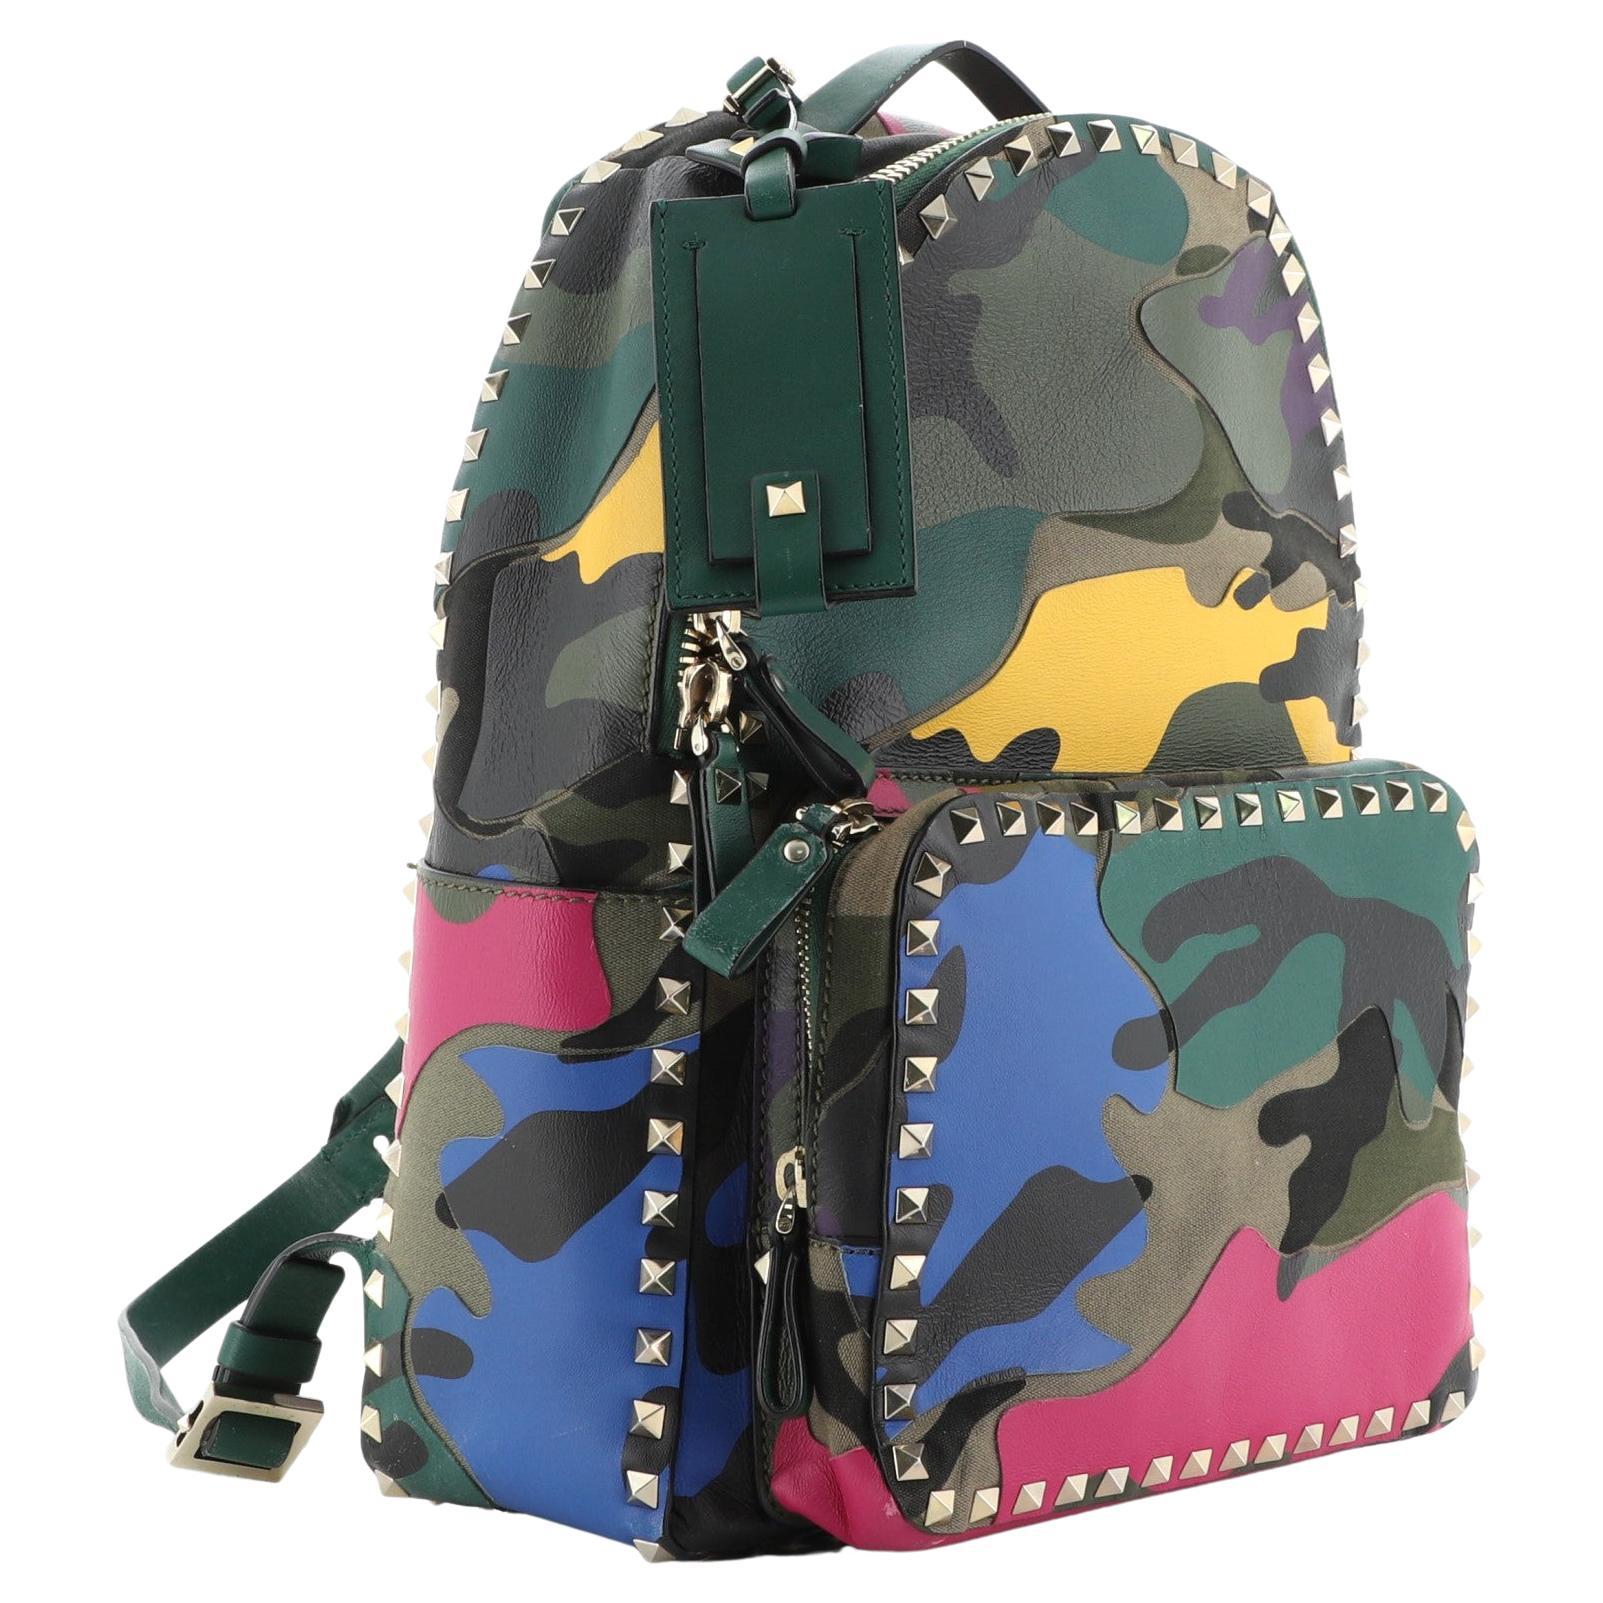 Valentino Garavani - Rockstud Army Green Graphic Camo Nylon Backpack